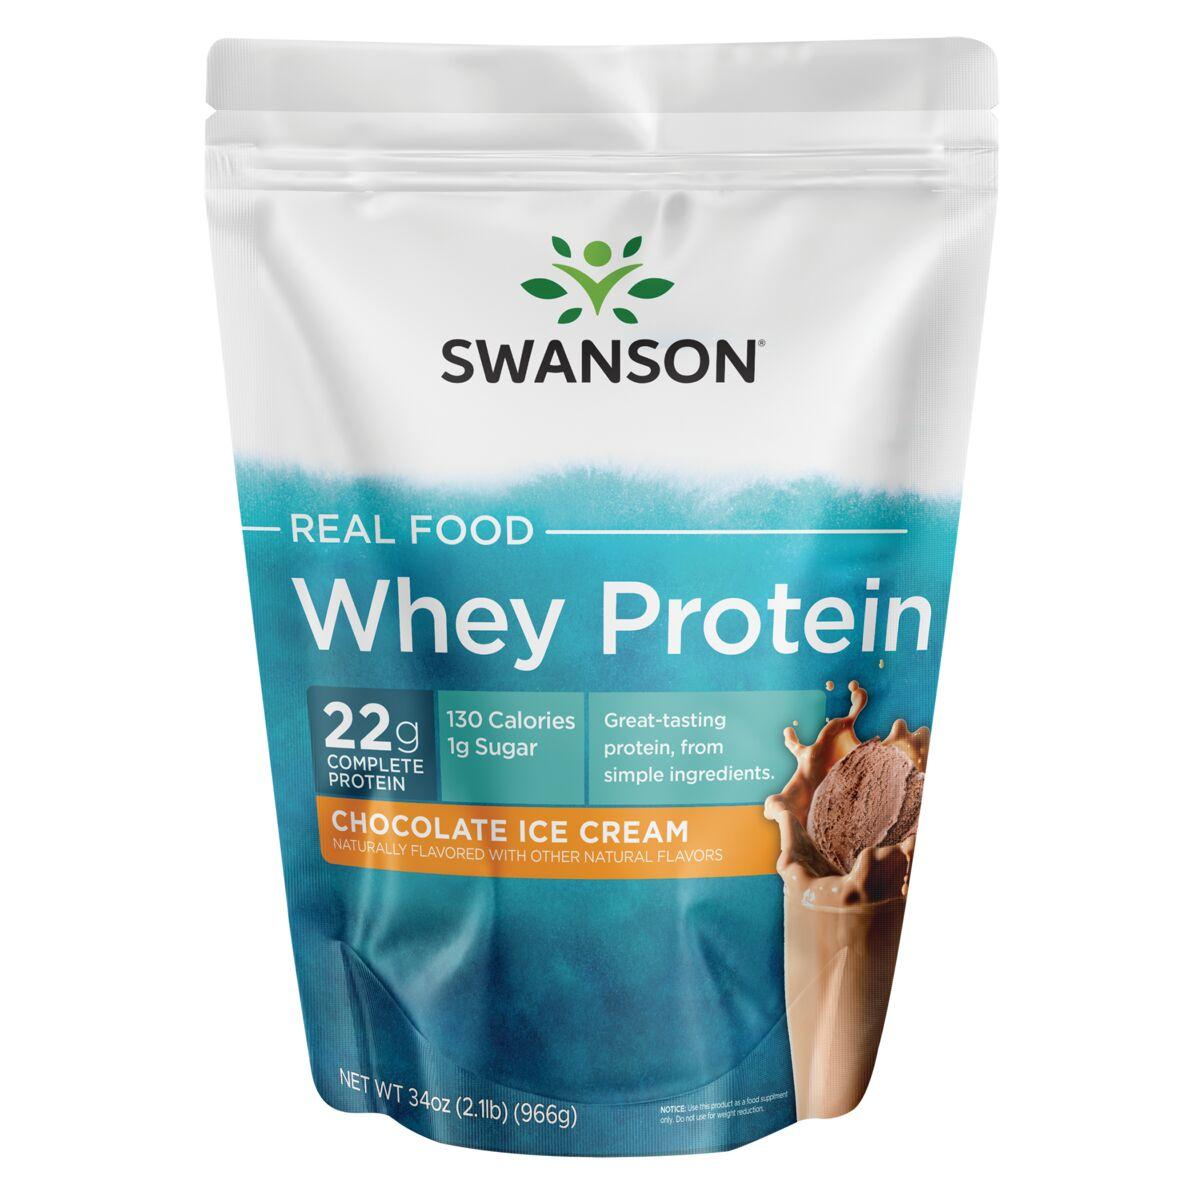 Swanson Ultra Real Food Whey Protein - Chocolate Ice Cream Vitamin | 34 oz Powder